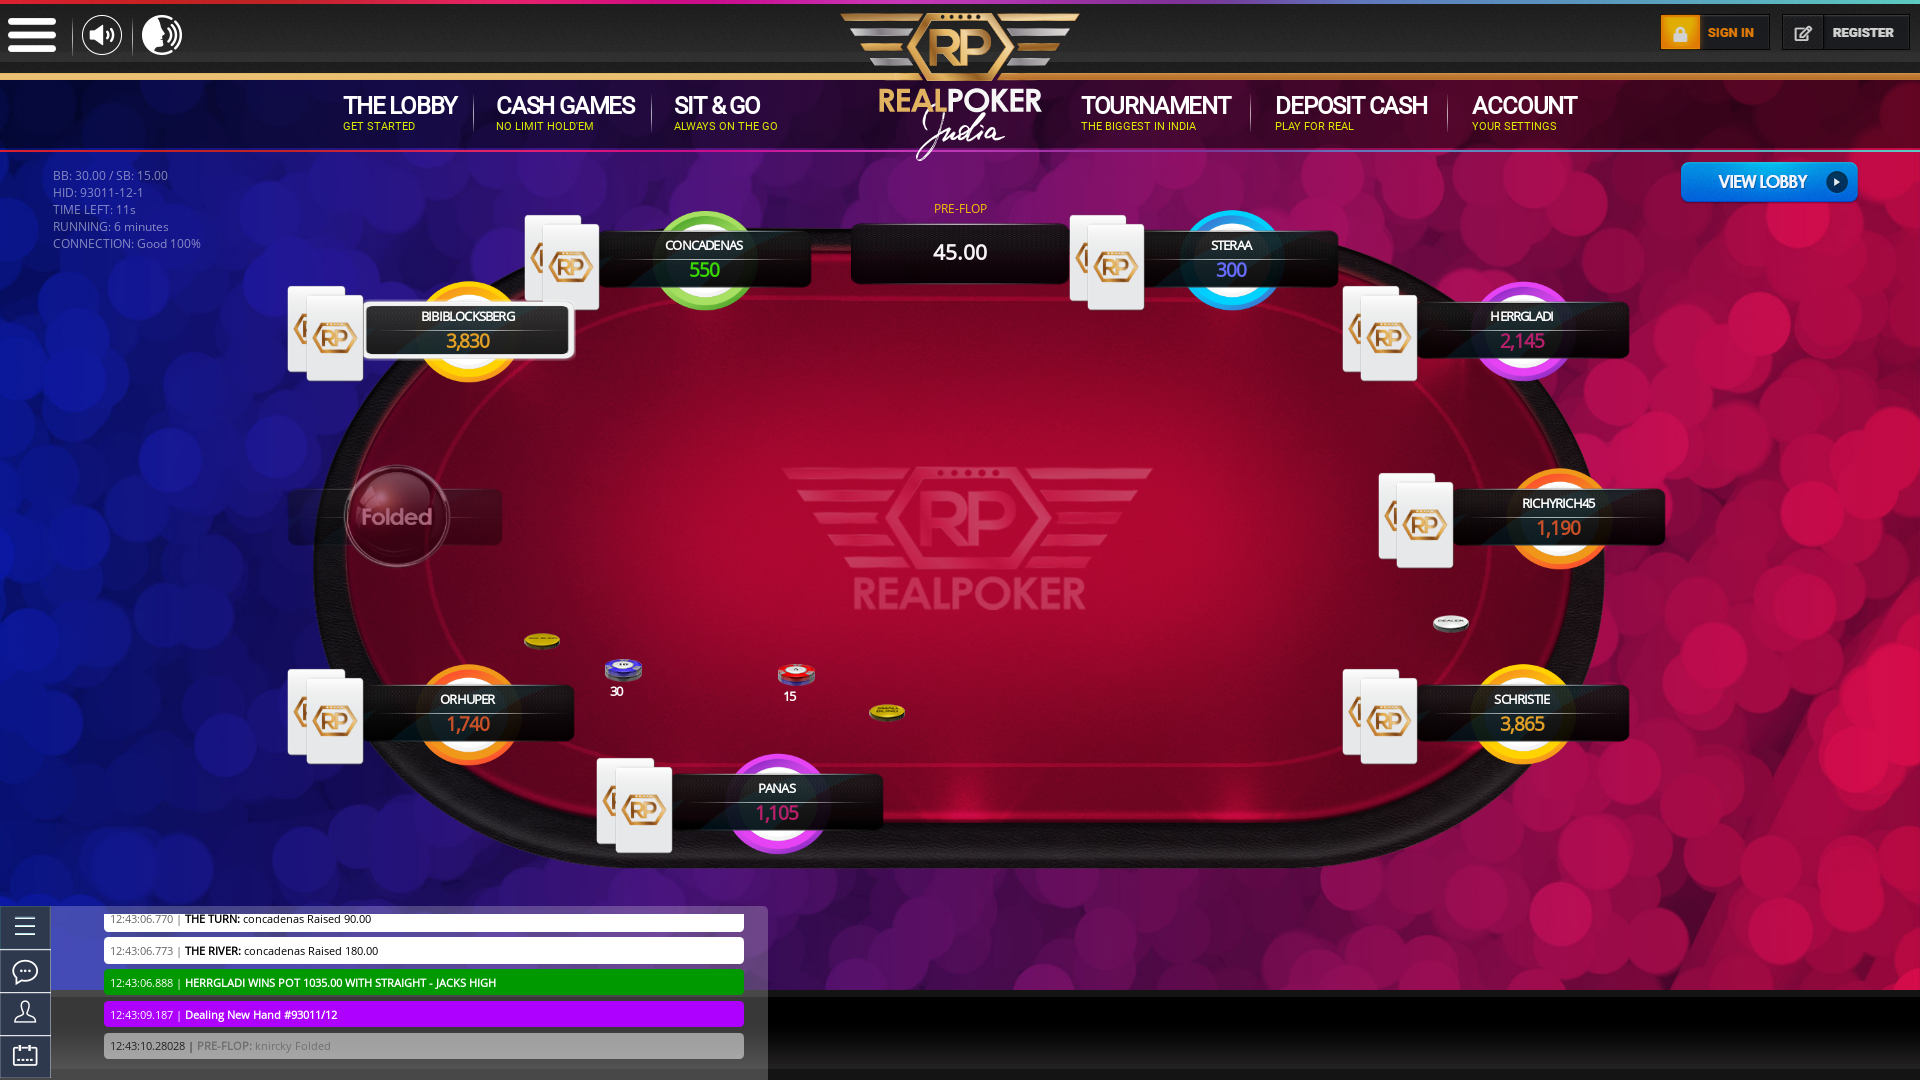 Goa Casino Poker on the 7th July